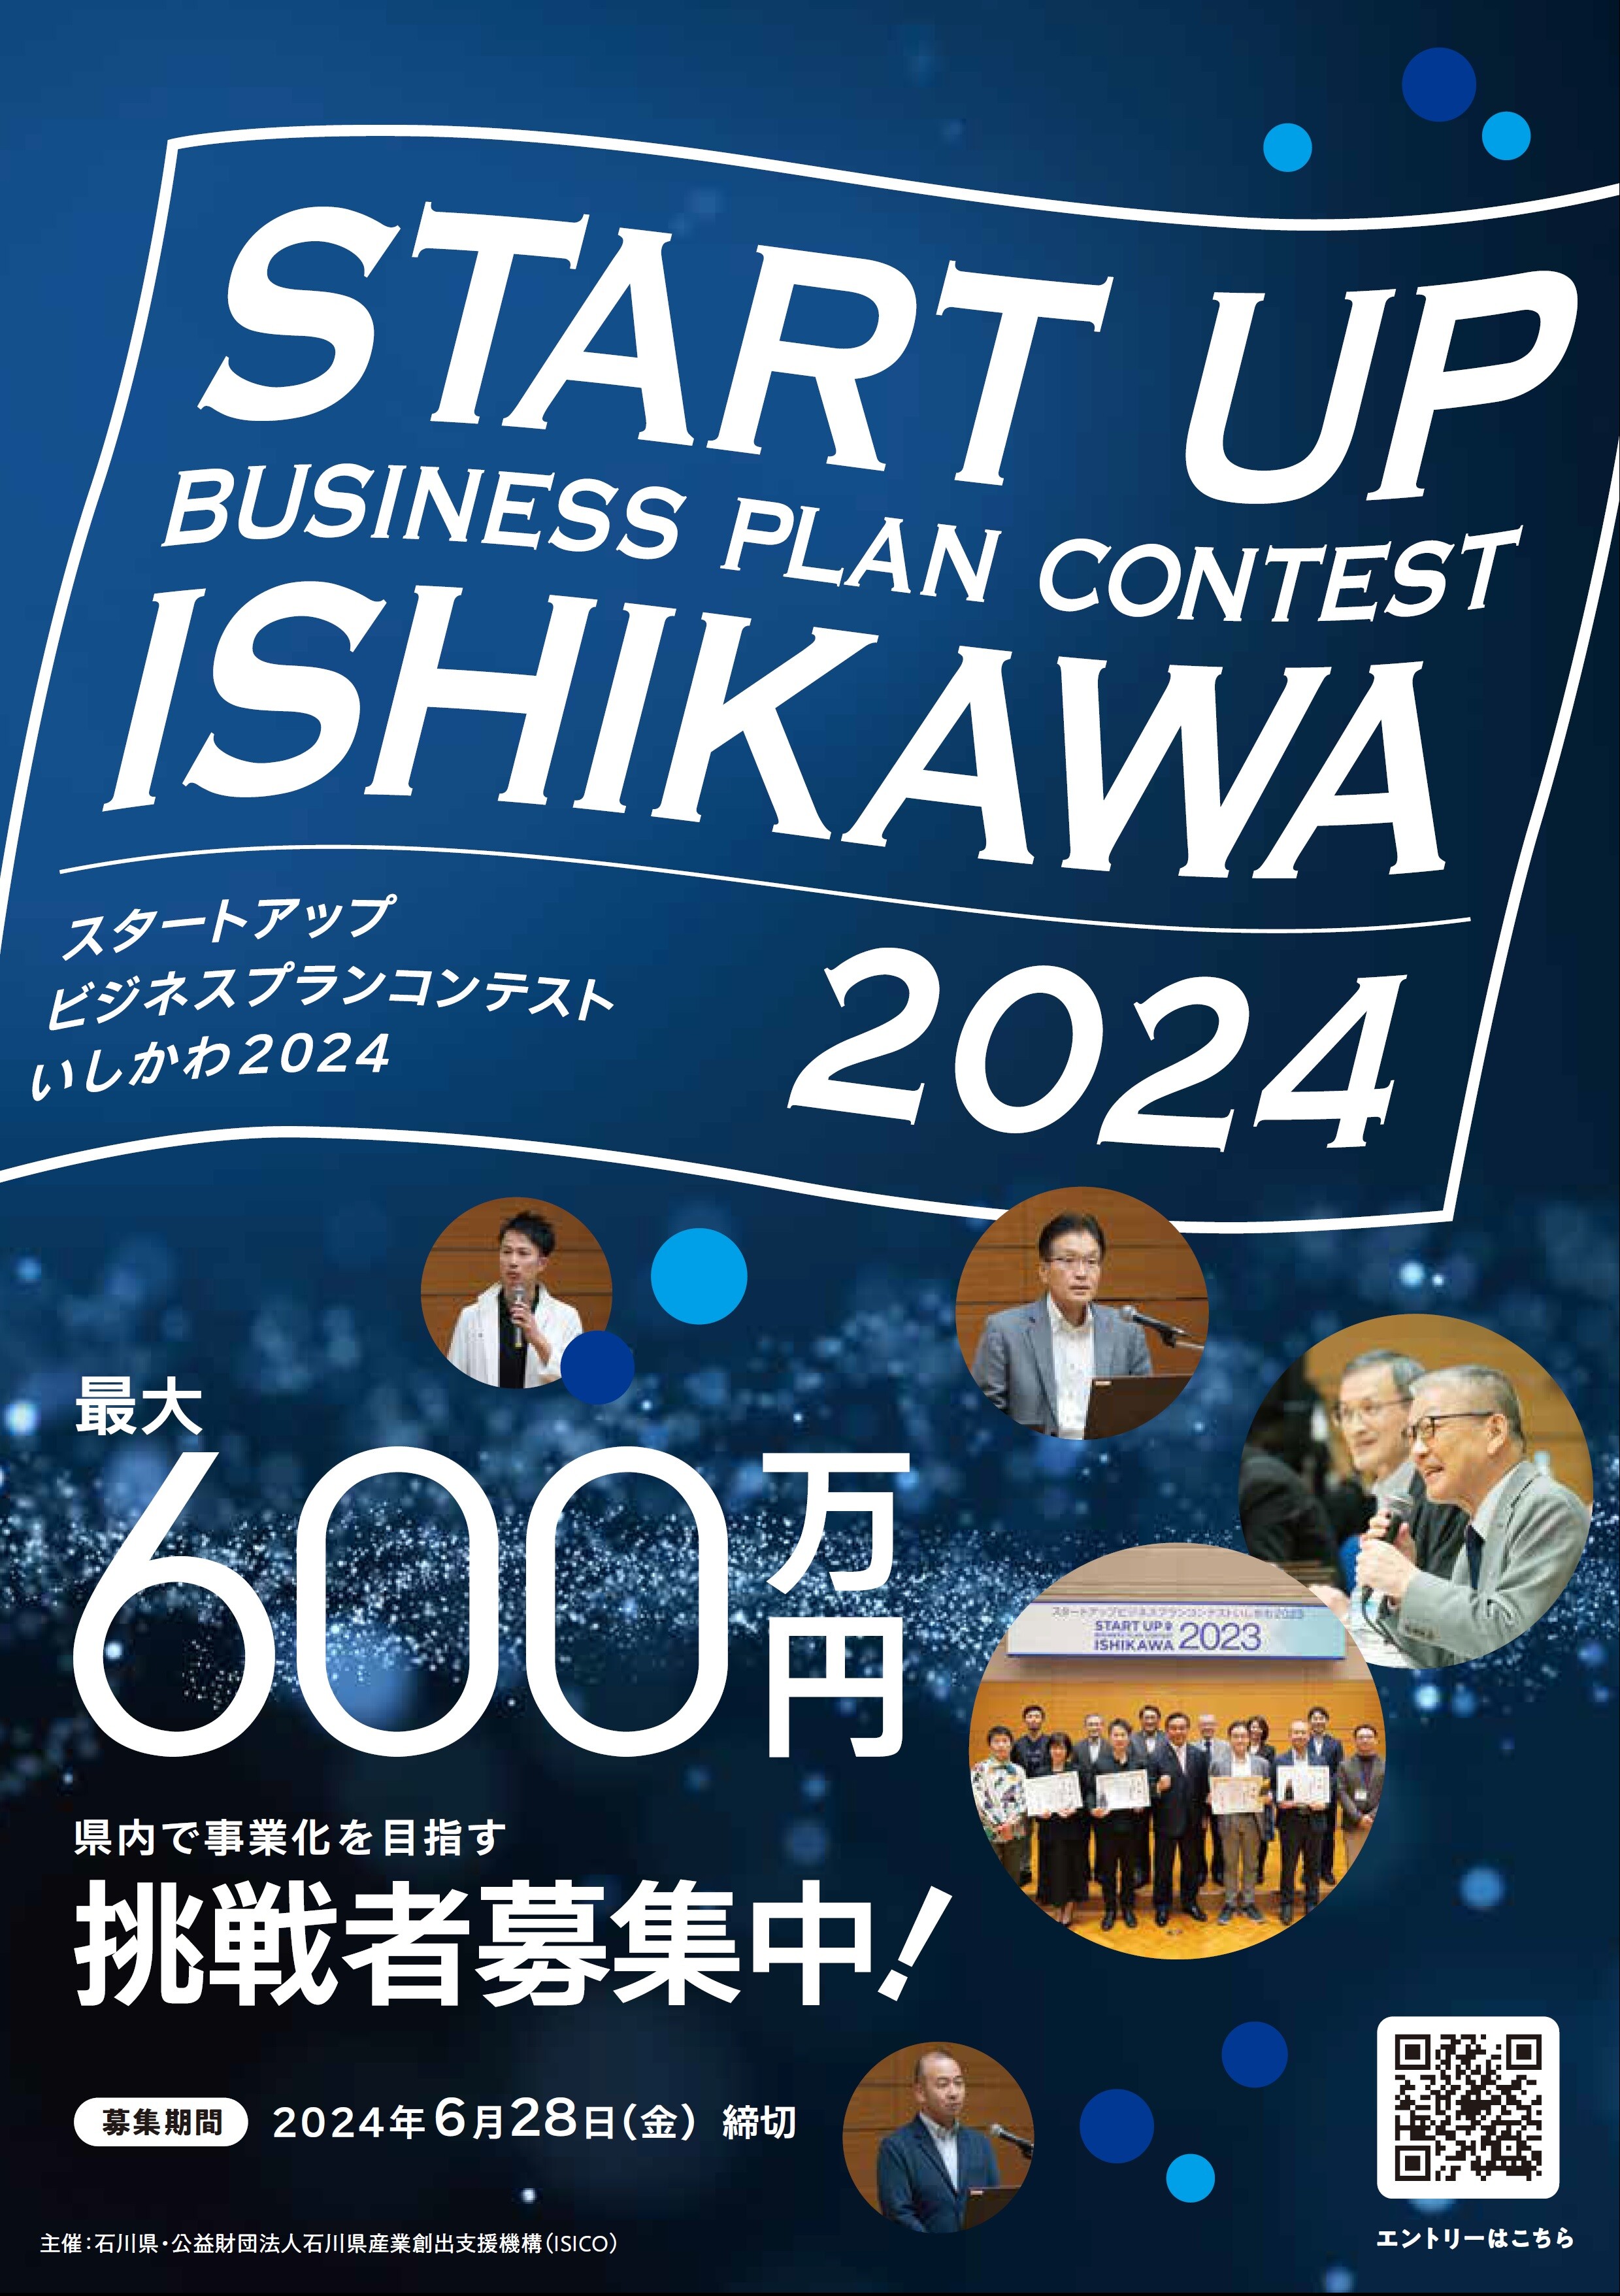 https://o-fsi.w3.kanazawa-u.ac.jp/about/vbl2/vbl1/vbl/update/start_up_ishikawa-2024.jpg